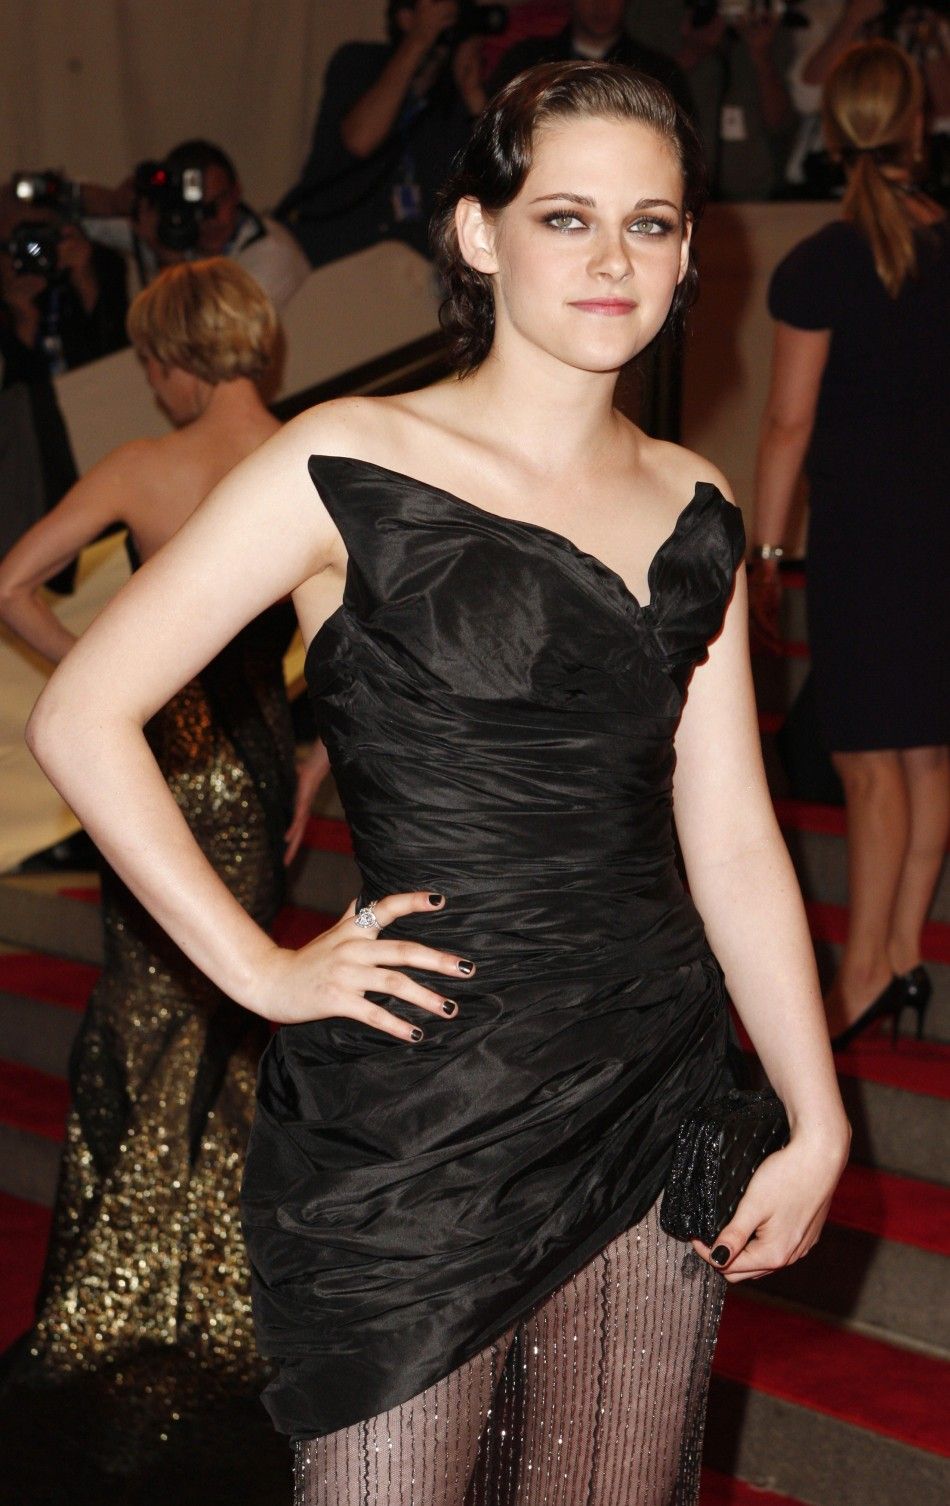 Actress Stewart arrives at the Metropolitan Museum of Art Costume Institute Benefit in New York